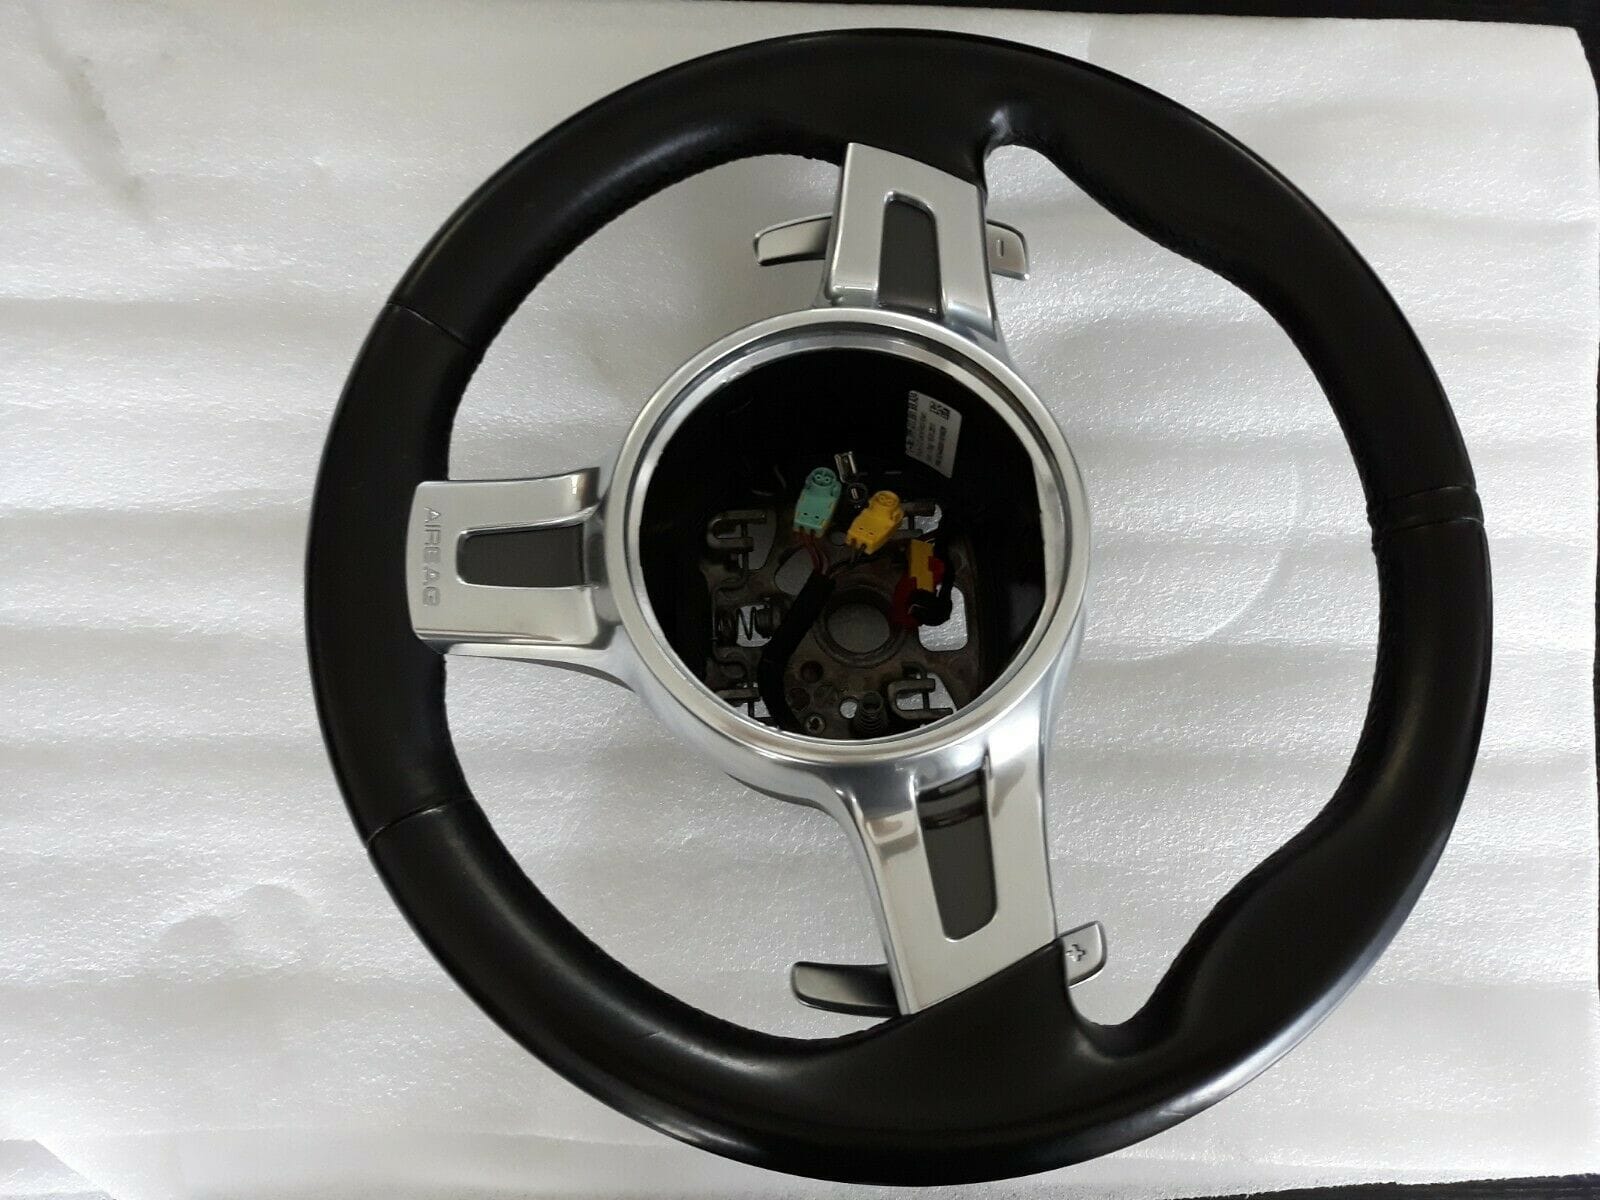 Steering/Suspension - OEM sport design steering wheel (with paddles) for 991, 997, 981, 987 - like new - Used - 9400, Belgium